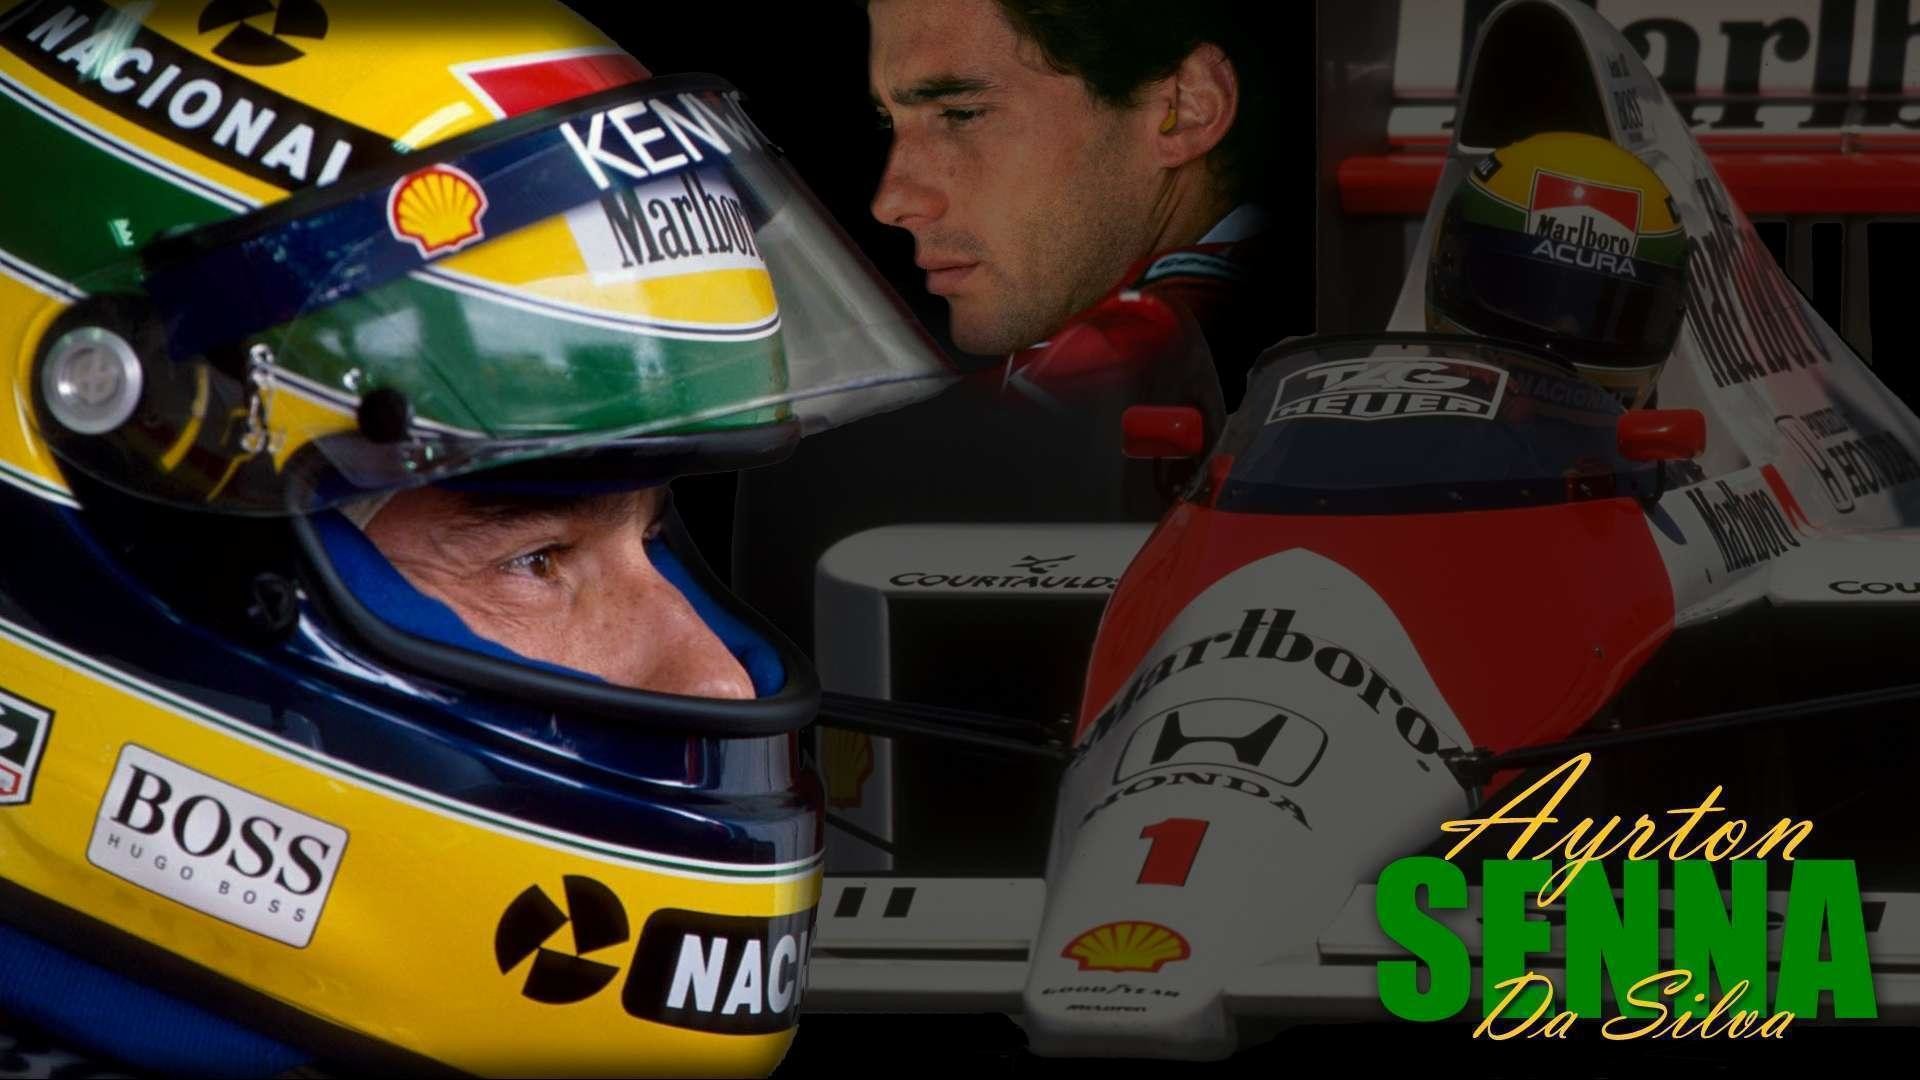 1920x1080 wallpaper.wiki-Ayrton-Senna-Background-Widescreen-PIC-WPC0010337